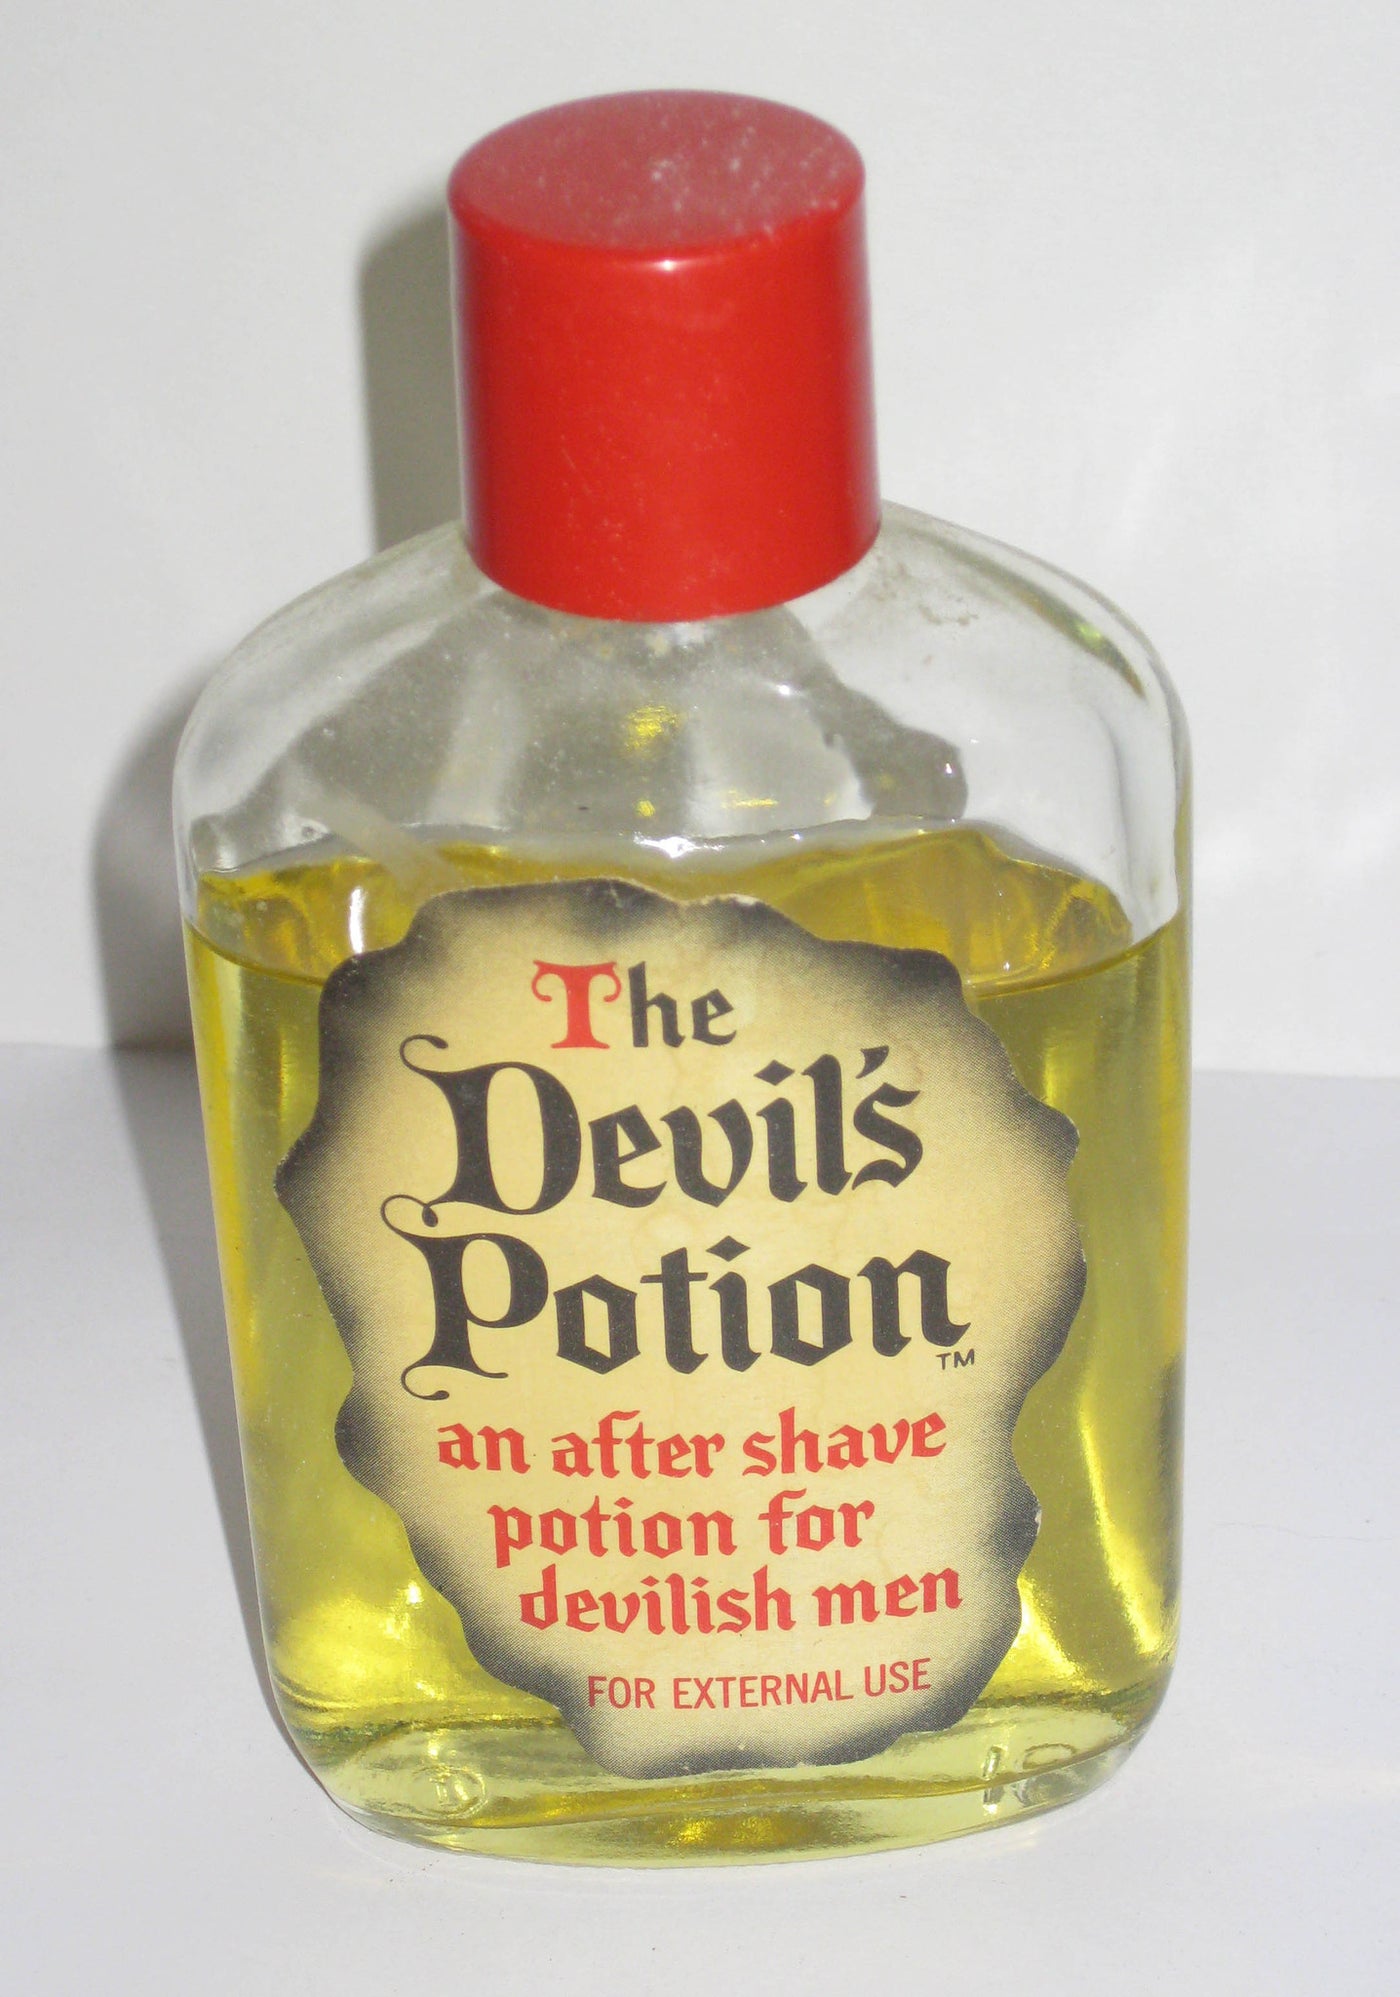 The Devil's Potion After Shave